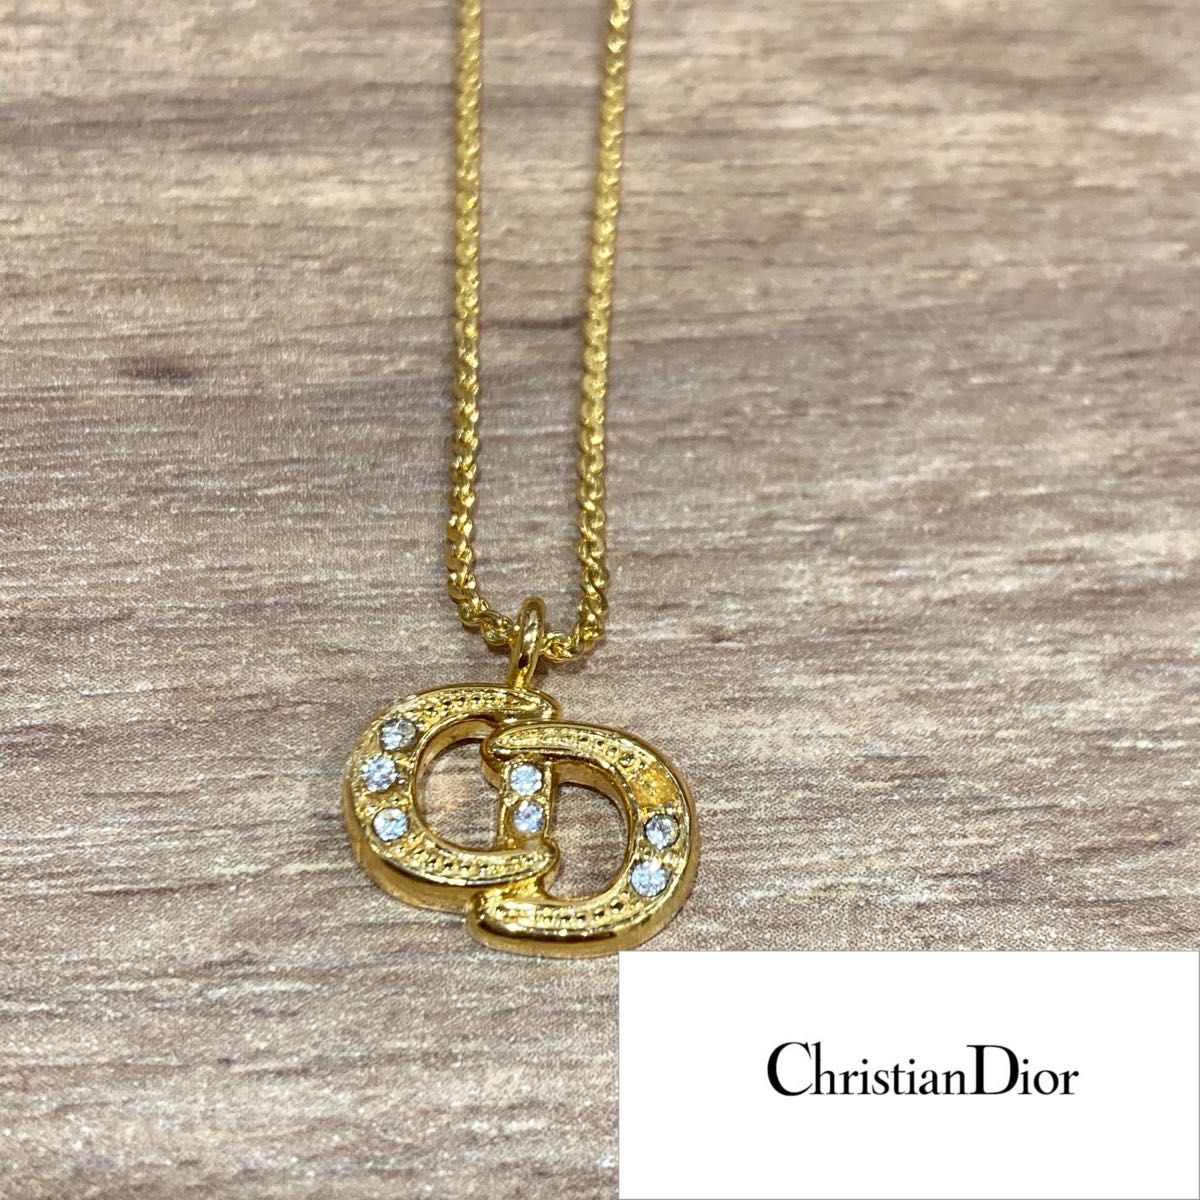 Christian Dior クリスチャンディオール 小物 アクセサリー ネックレス ブランド ファッション ゴールドカラー -  www.projettomd.com.br